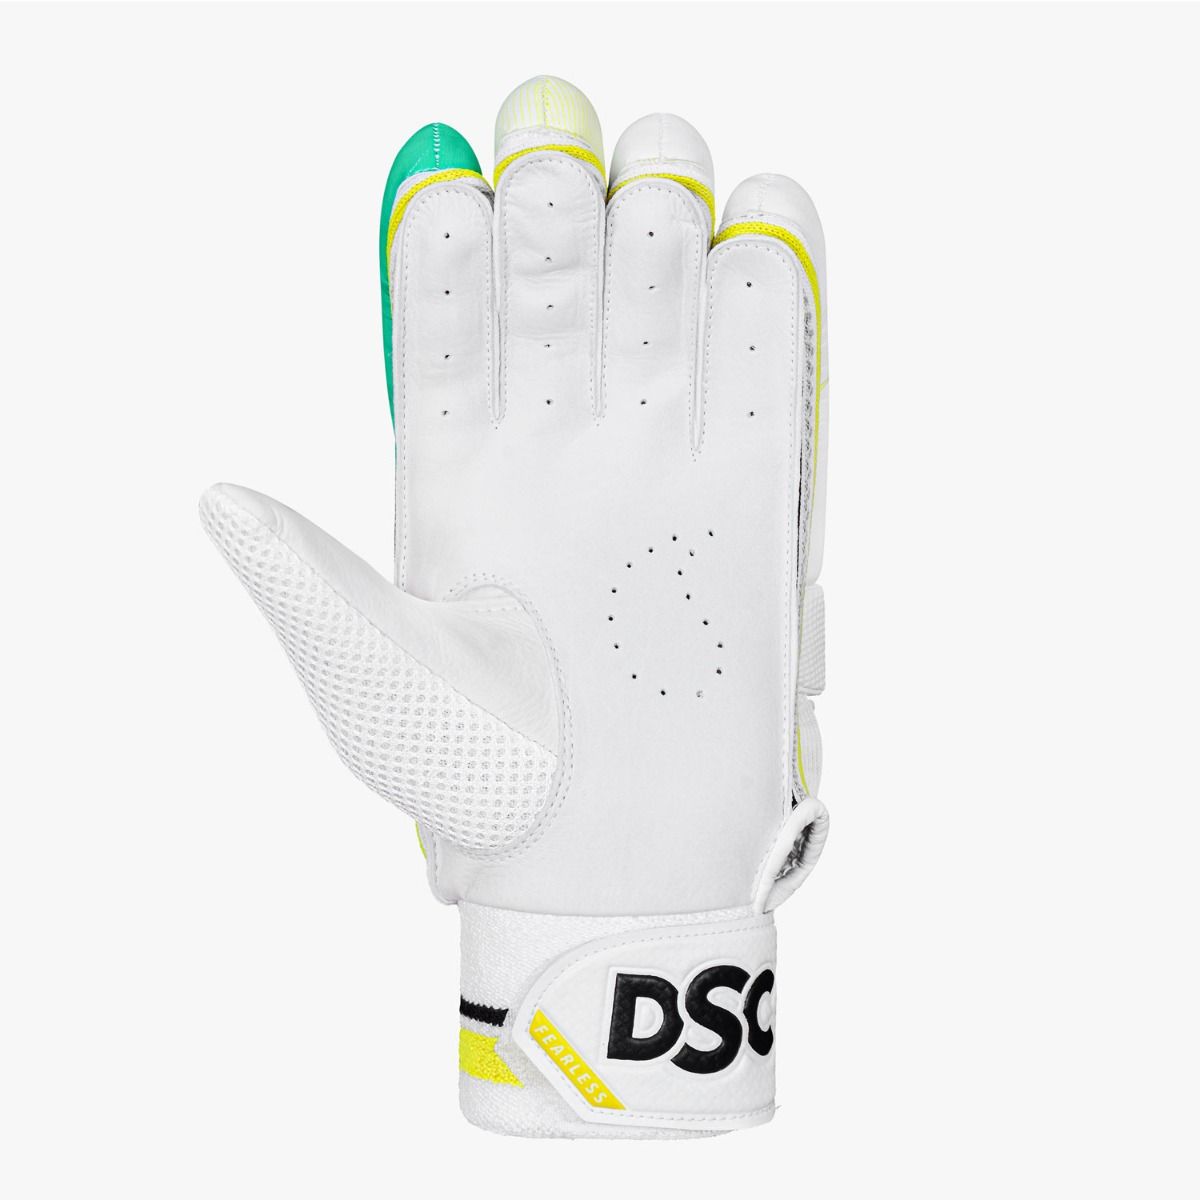 DSC Batting Gloves Condor Rave Batting Gloves